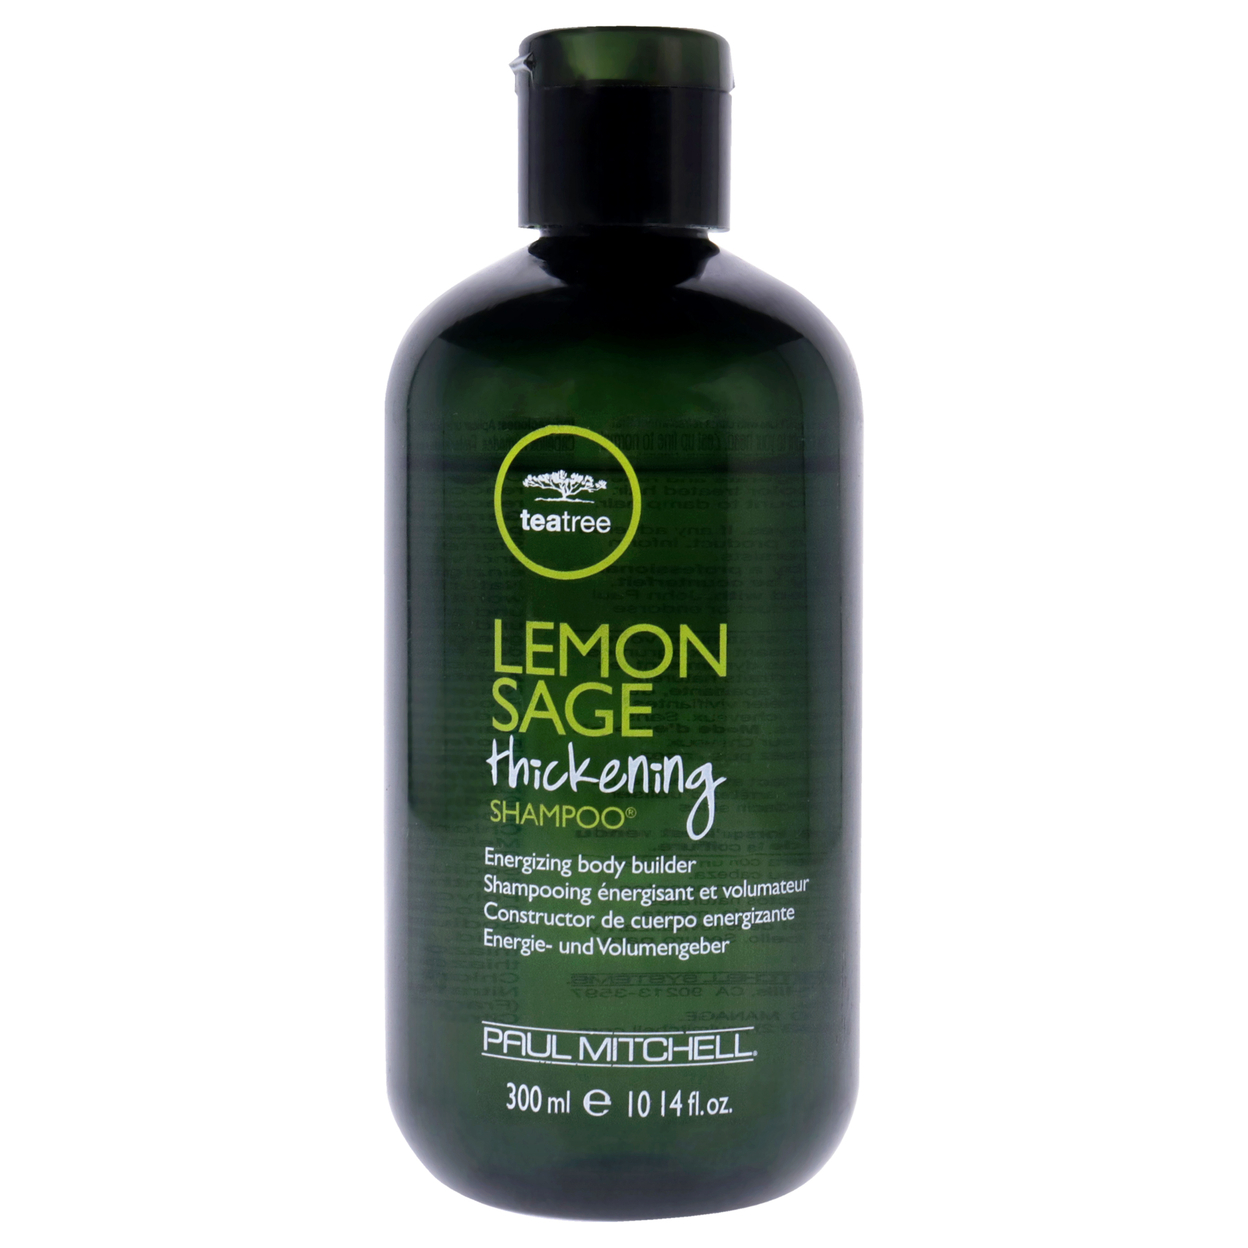 Paul Mitchell Lemon Sage Thickening Shampoo 10.14 Oz